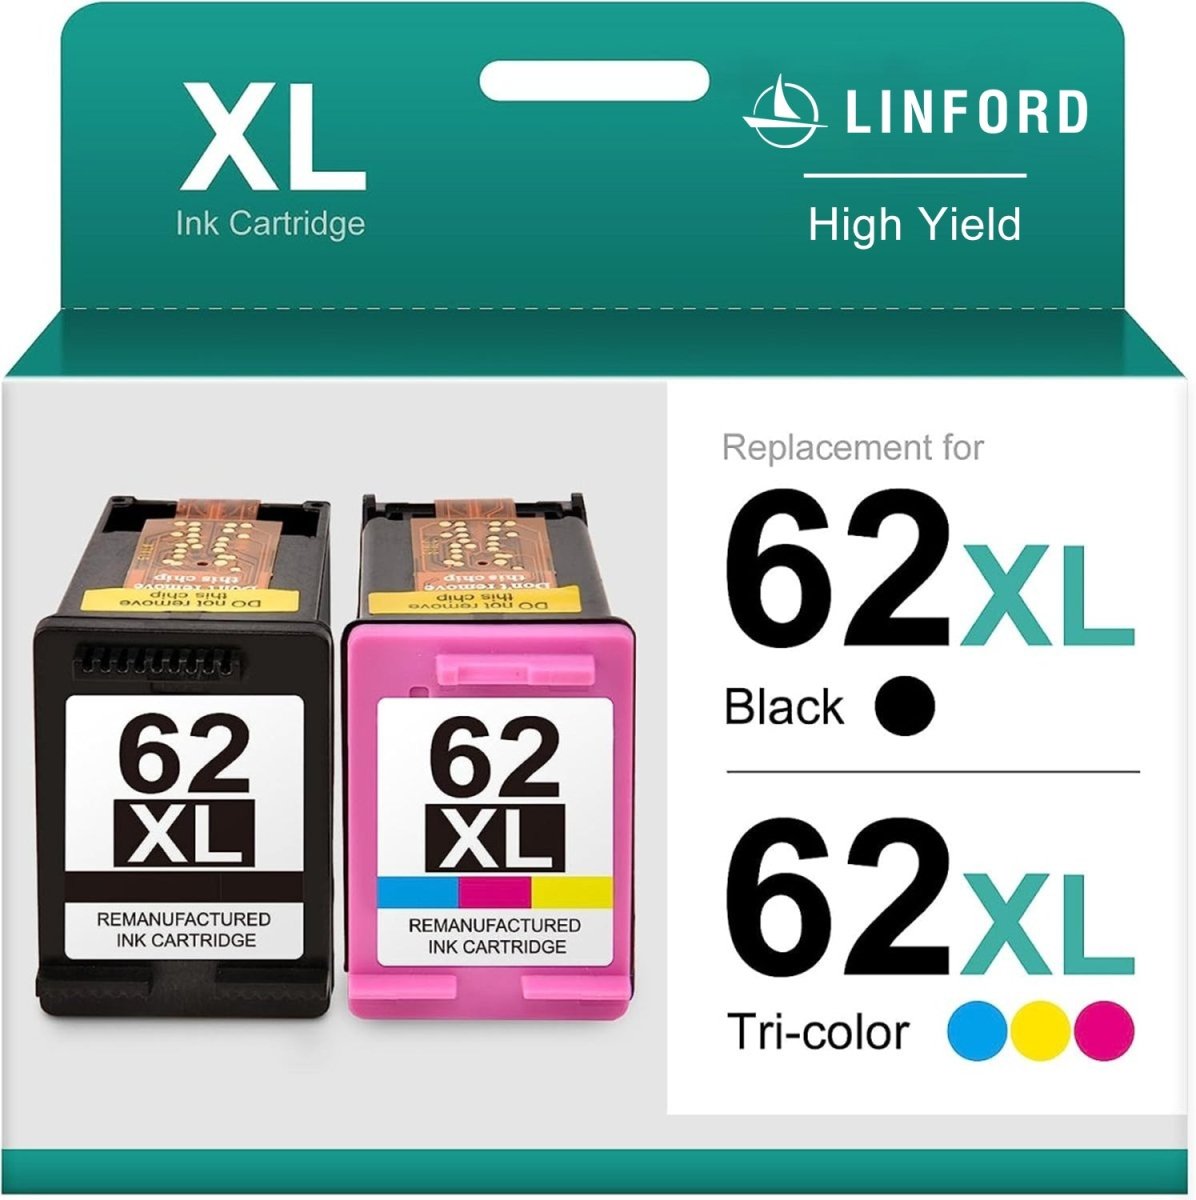 HP 62XL Ink Cartridge Combo Pack Remanufactured (1 Black, 1 Tri-Color) - Linford Office:Printer Ink & Toner Cartridge